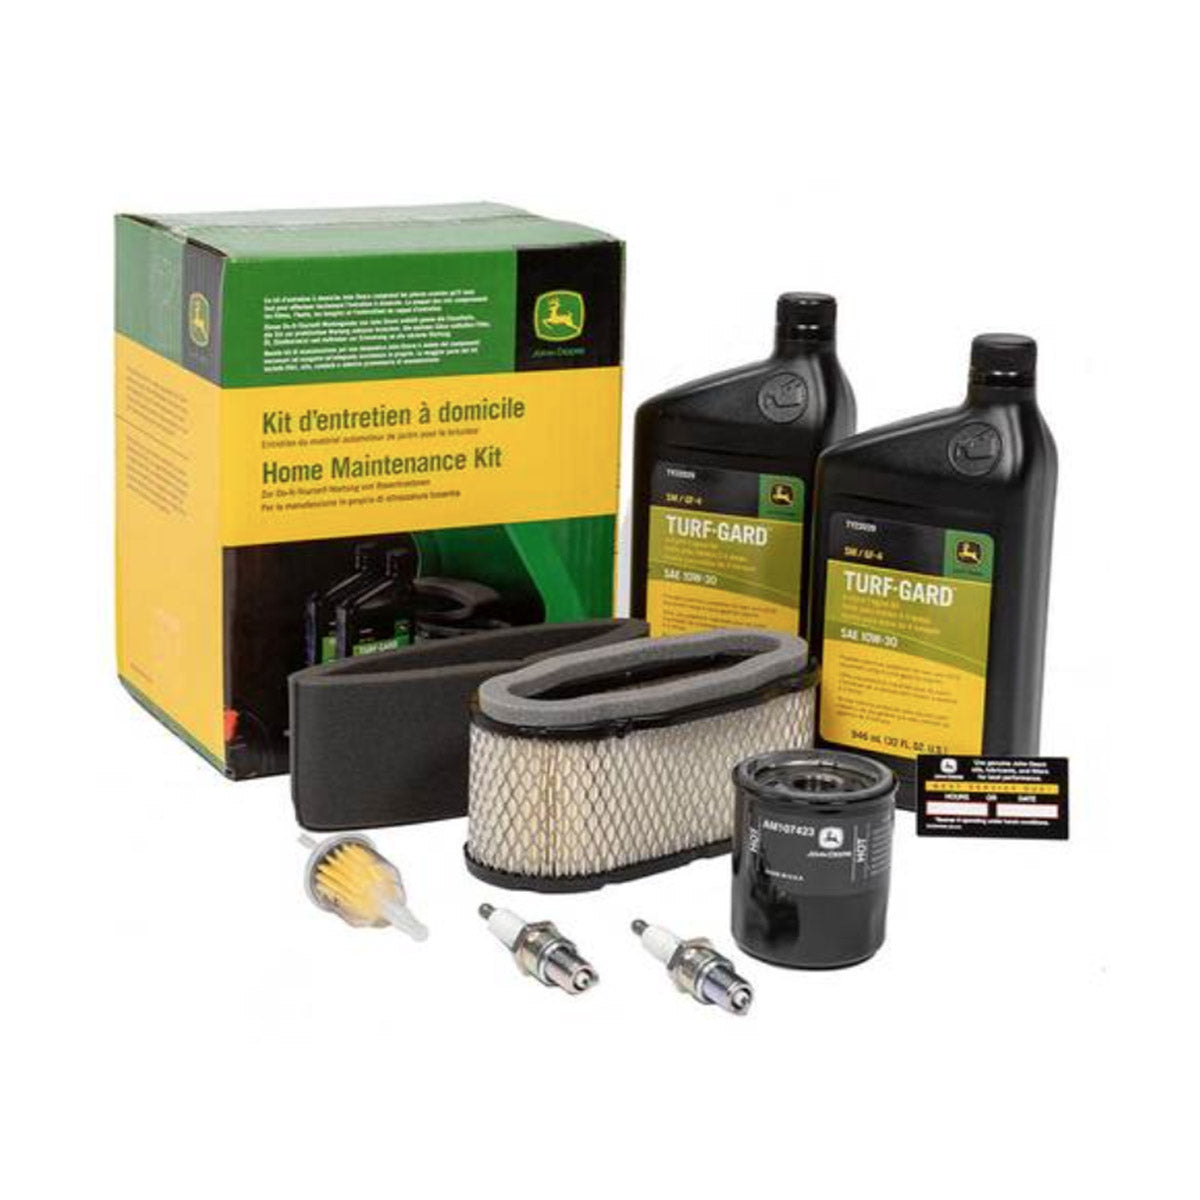 John Deere Home Maintenance Kit for GT, GX, X300, X500 & Z400 Series - LG249